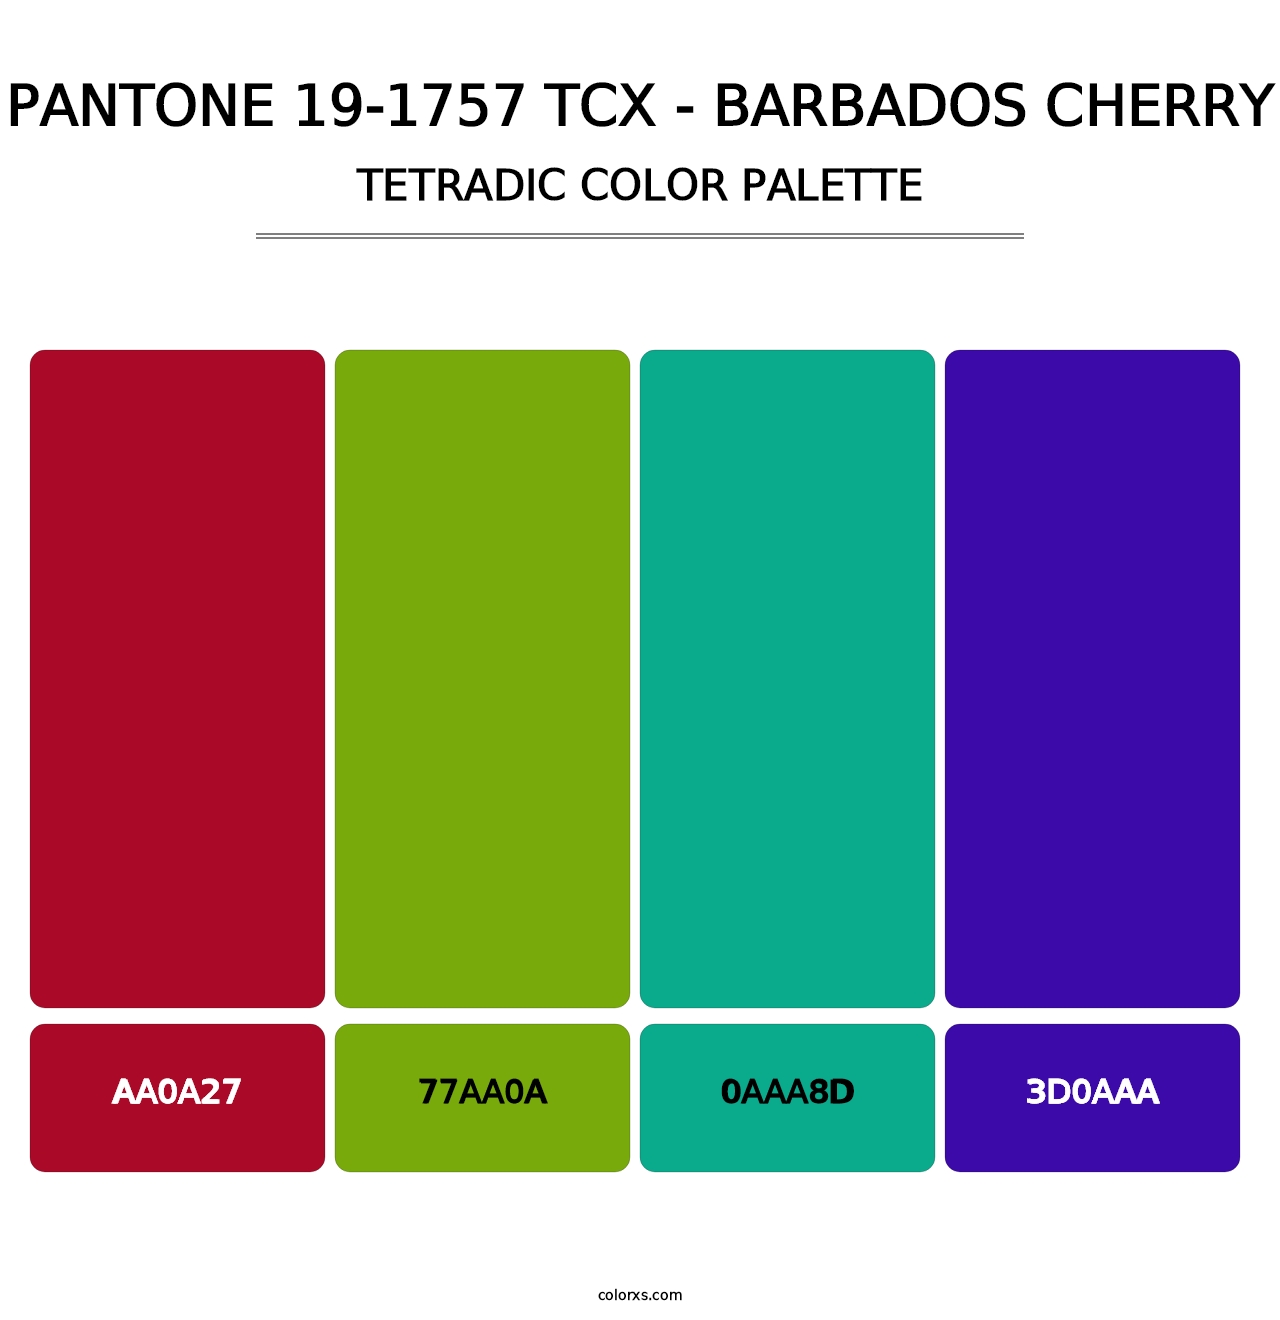 PANTONE 19-1757 TCX - Barbados Cherry - Tetradic Color Palette